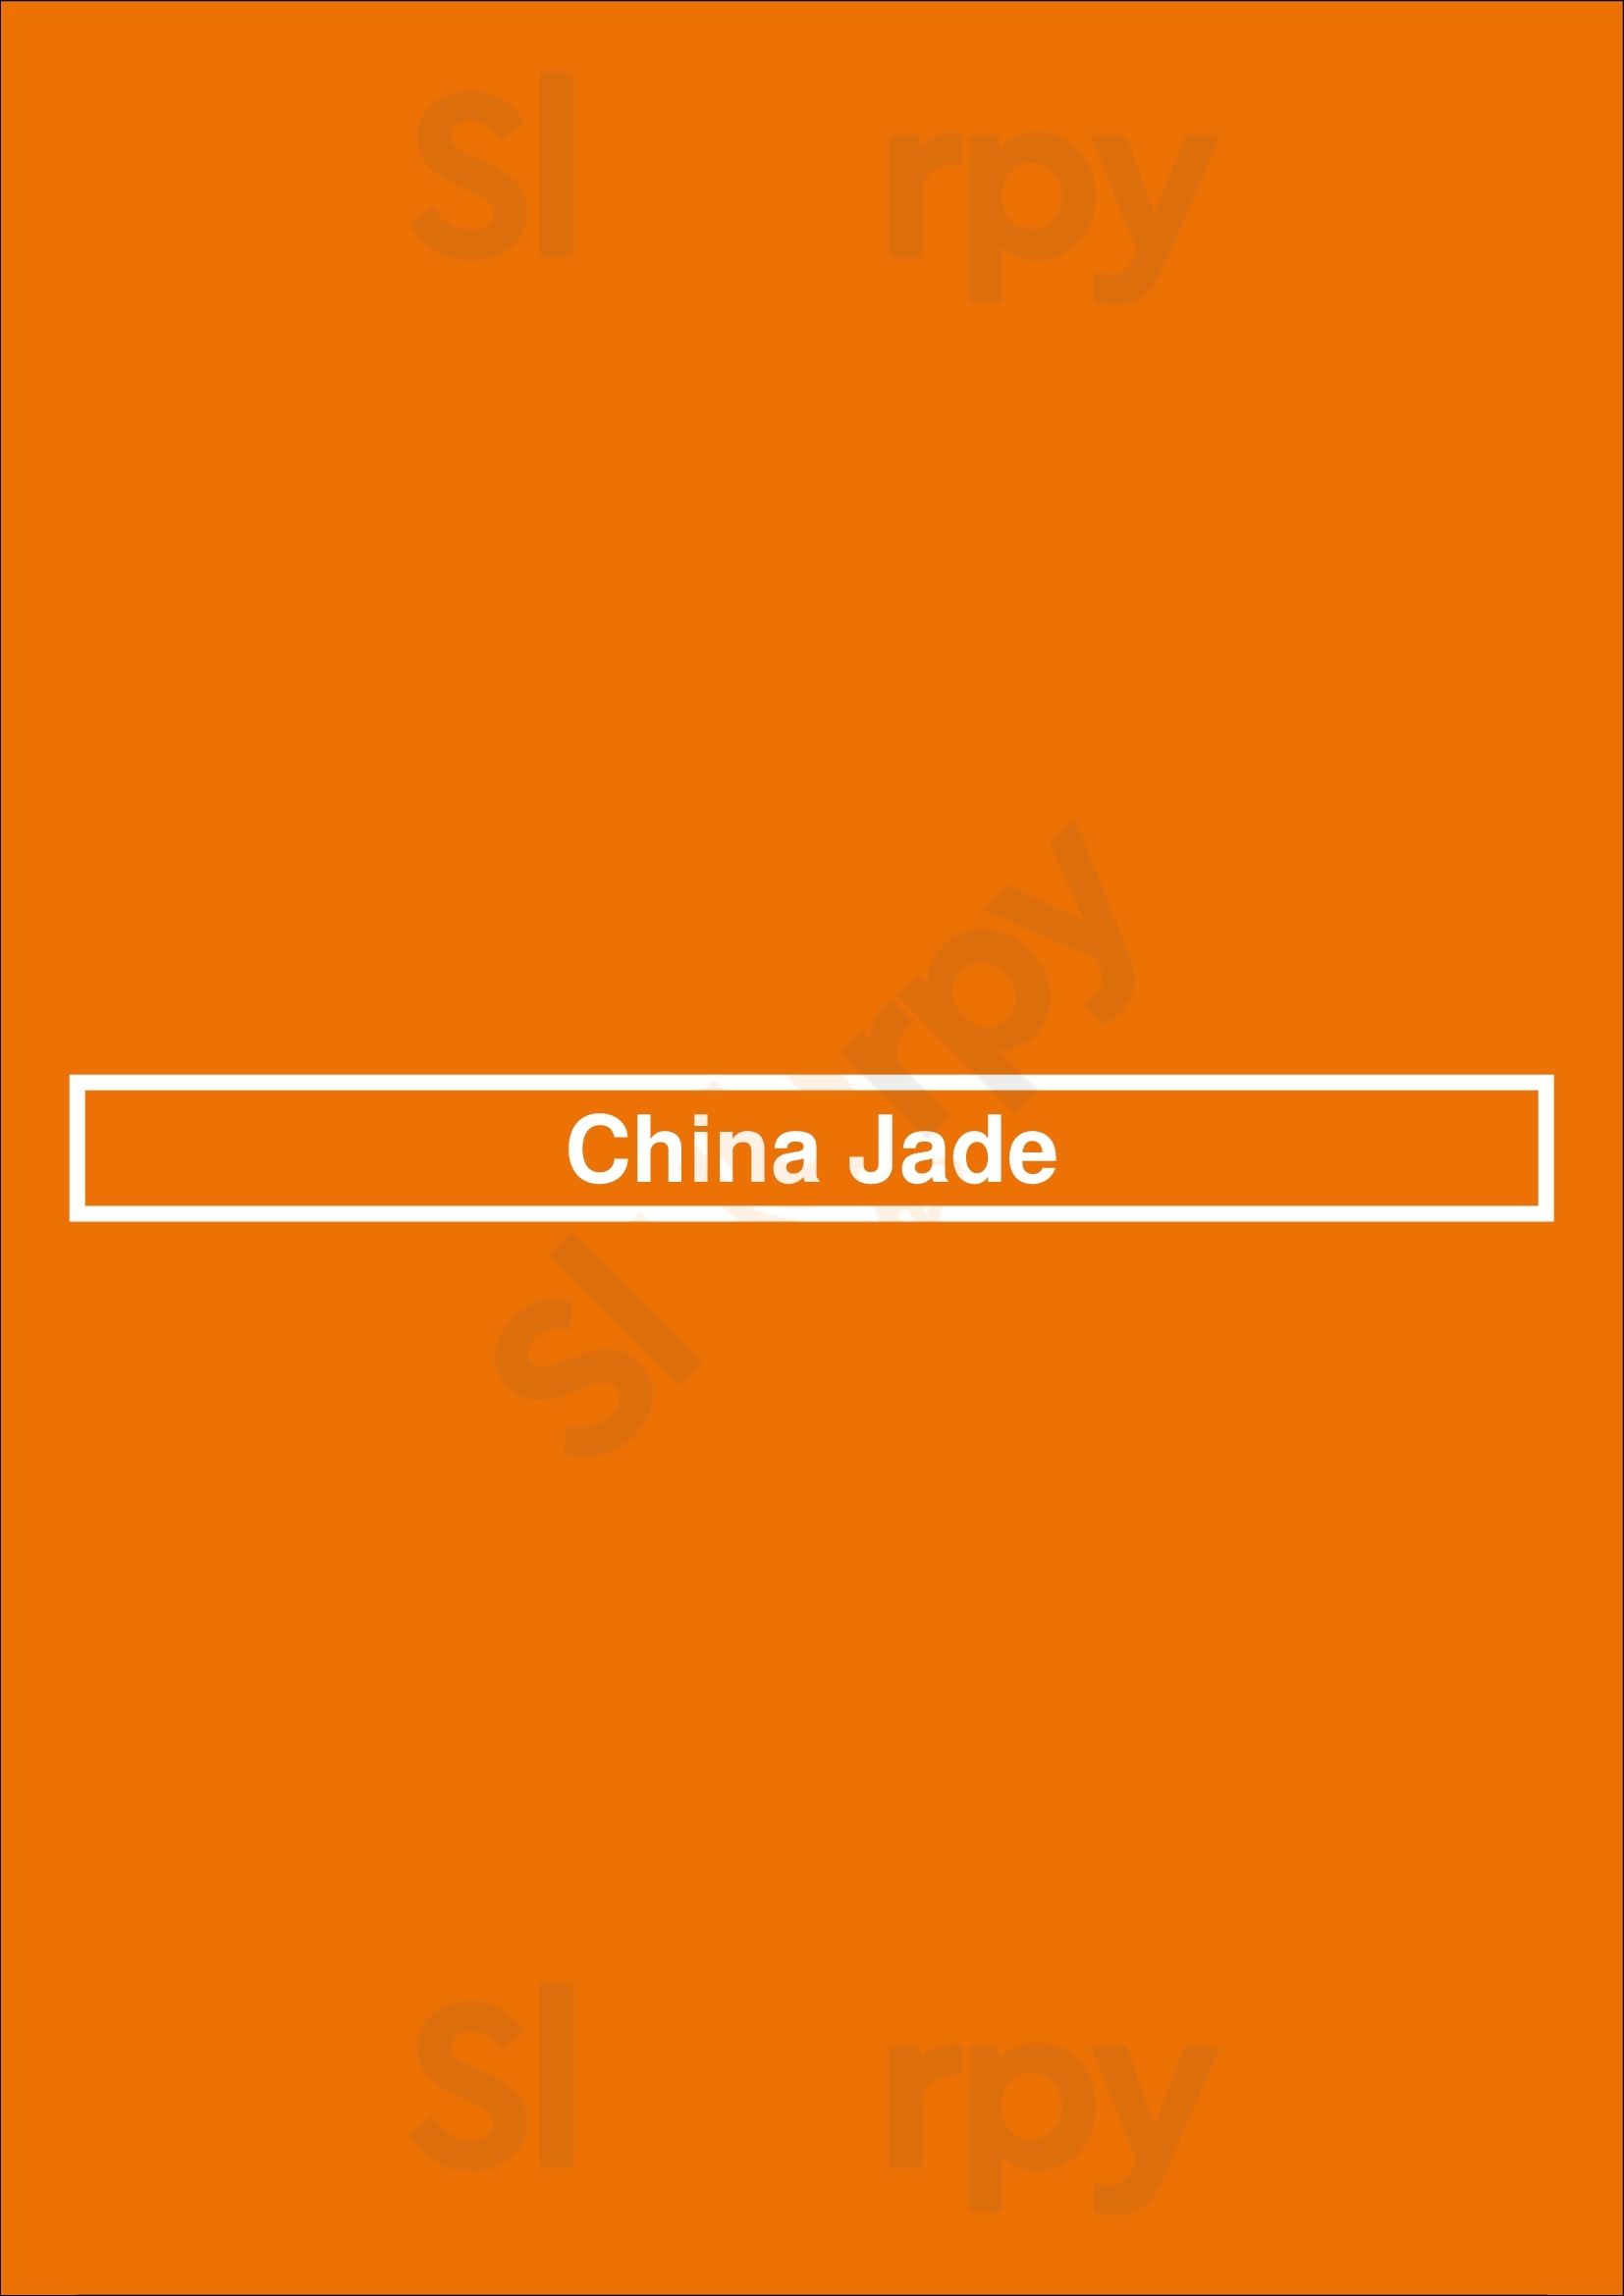 China Jade Scottsdale Menu - 1